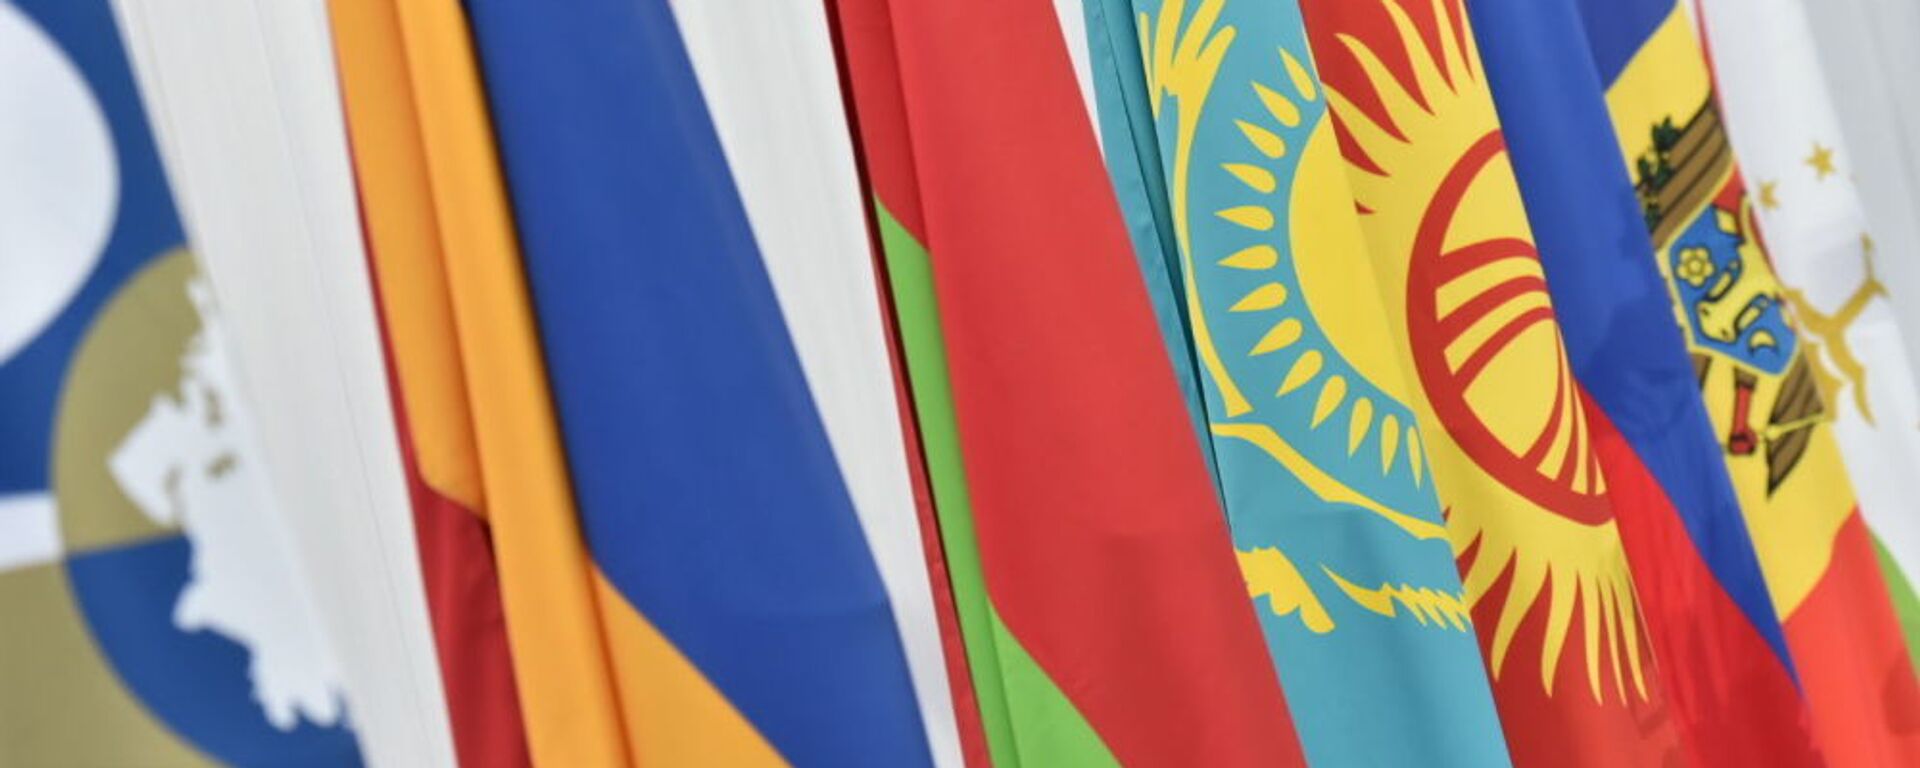 Флаги стран-участниц ЕАЭС - Sputnik Узбекистан, 1920, 20.05.2020